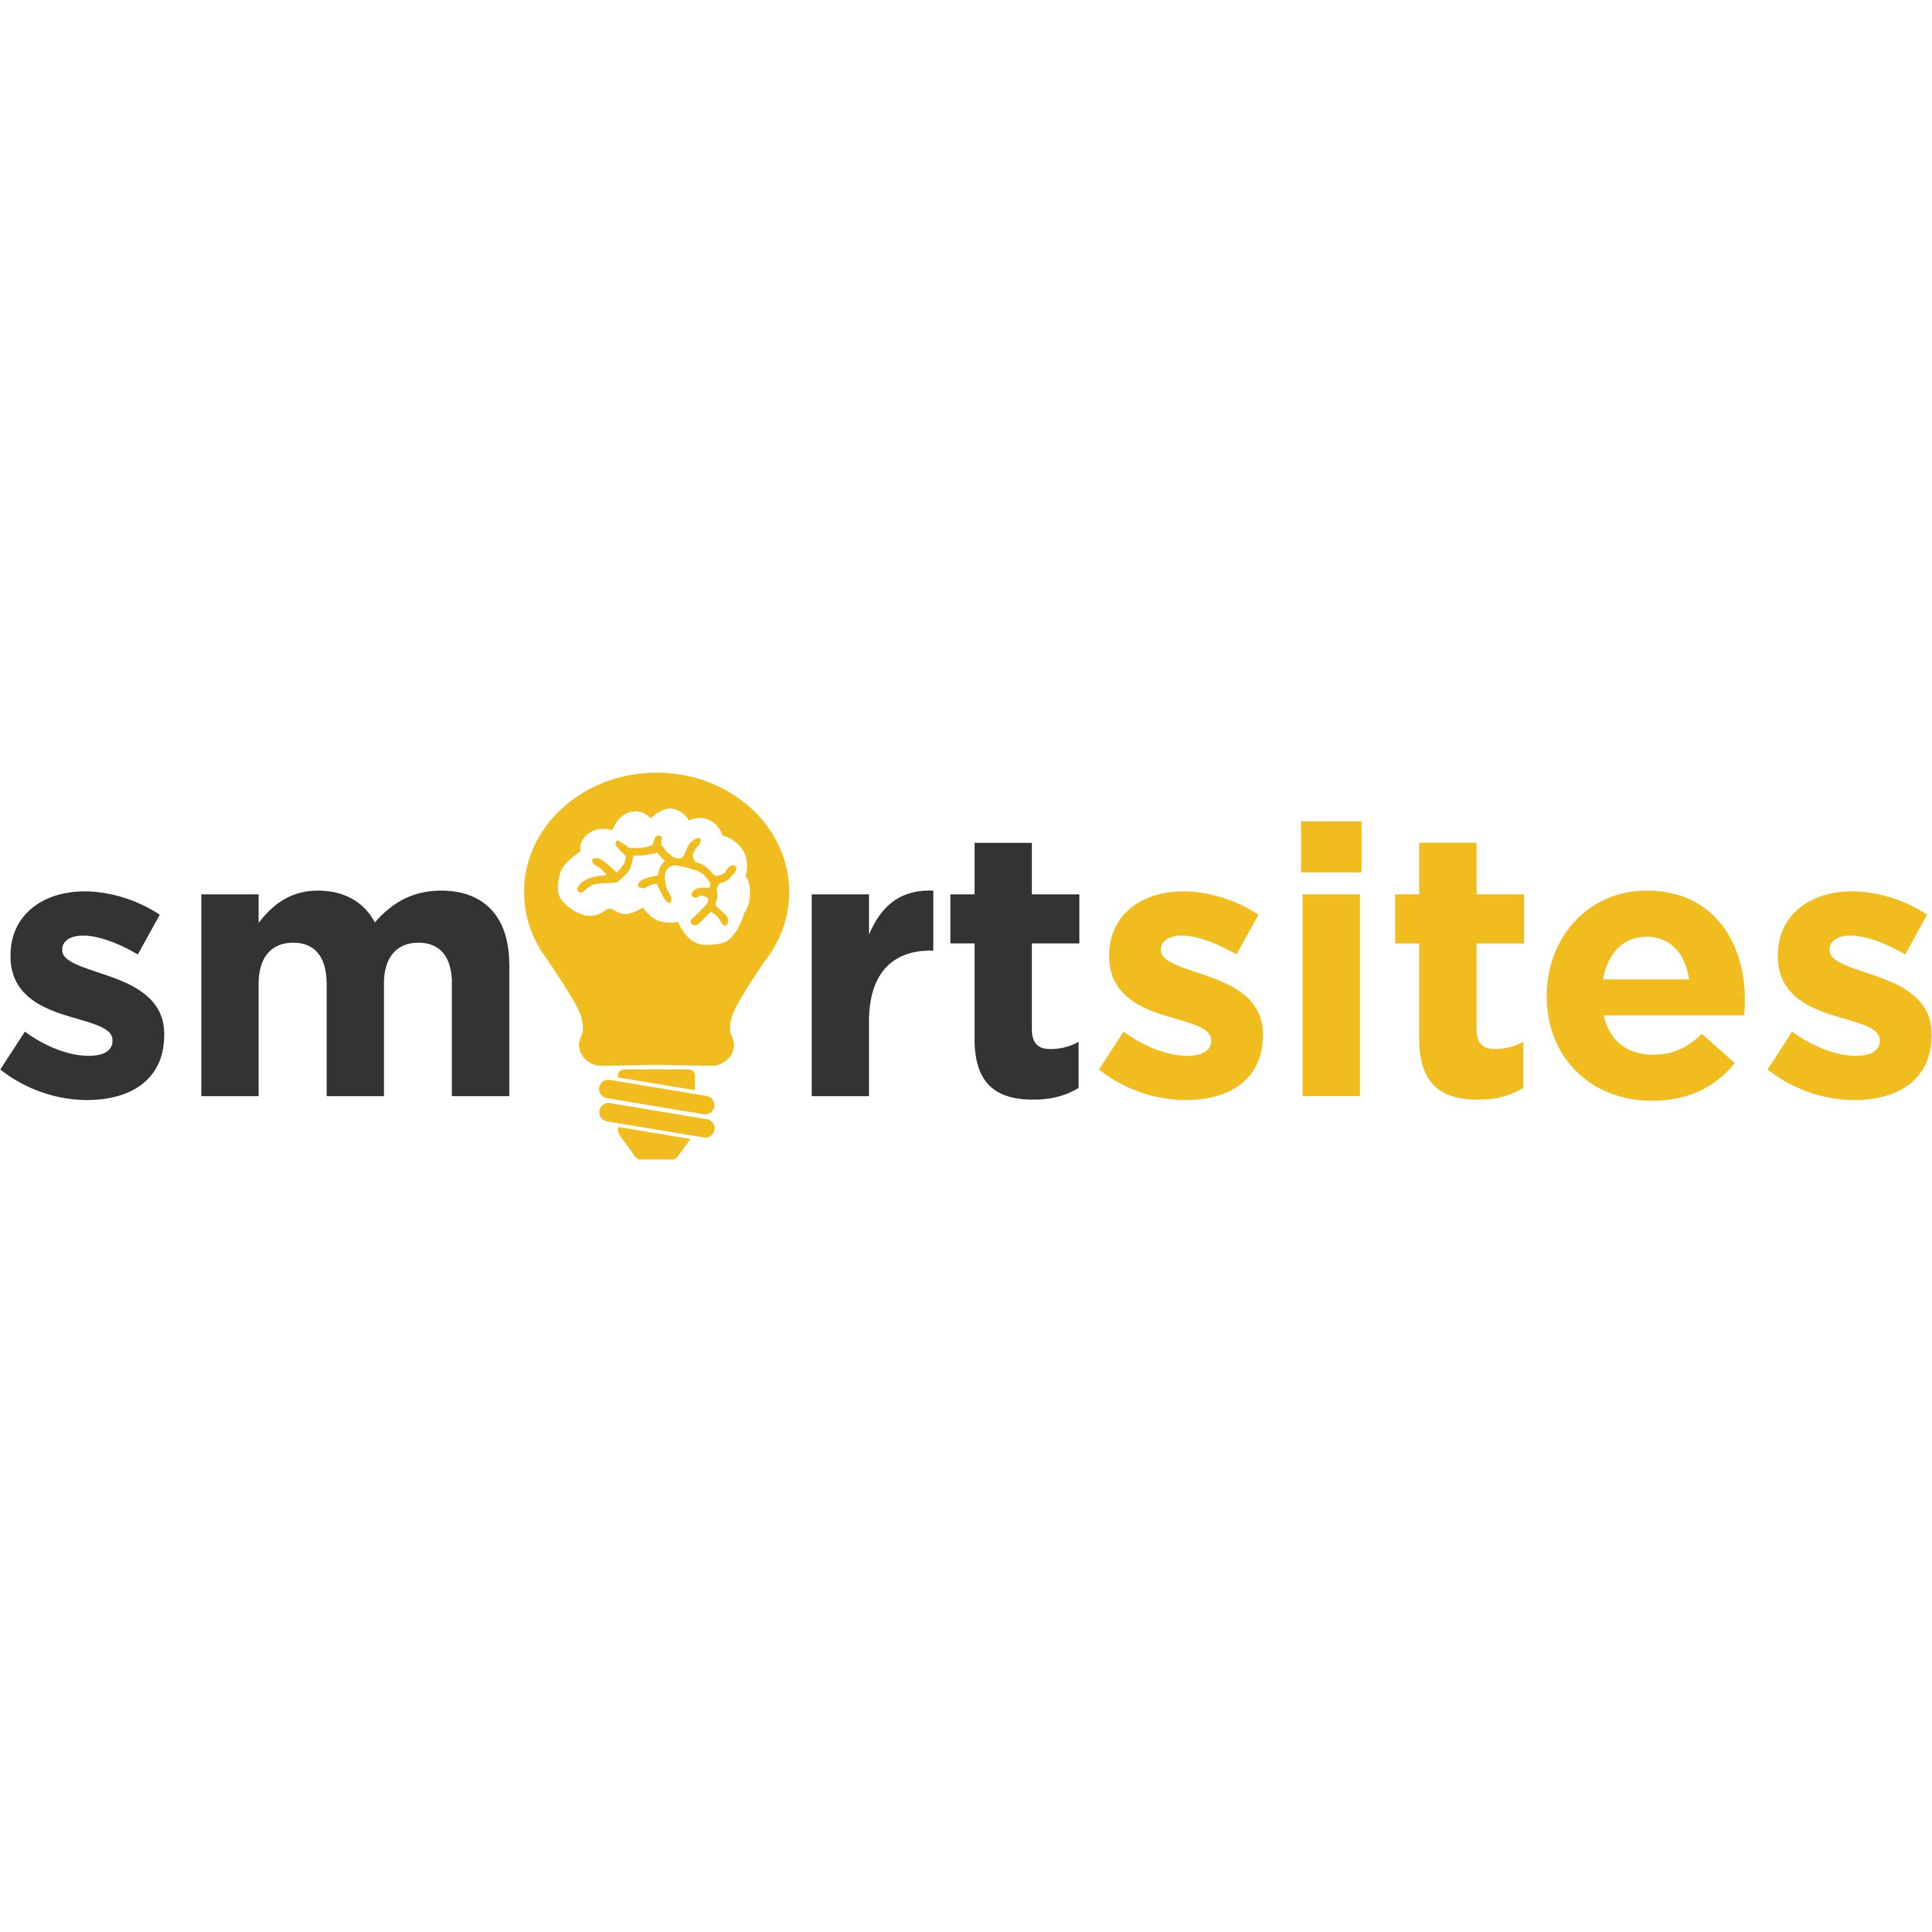 Top Enterprise Online Marketing Firm Logo: SmartSites